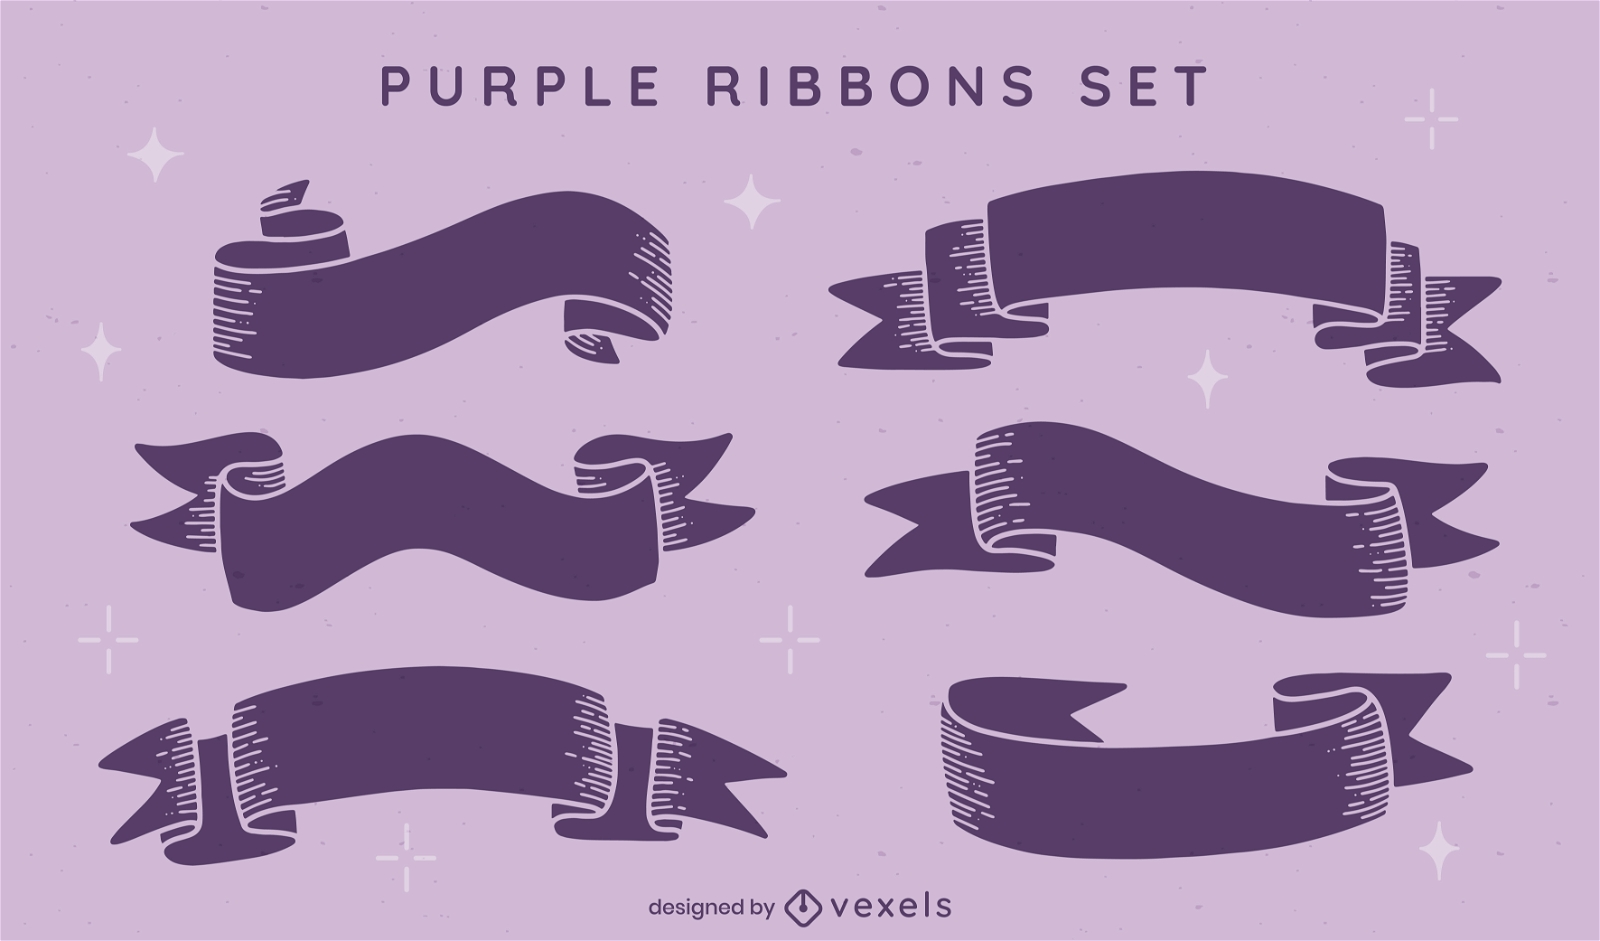 Purple ribbons cut out set